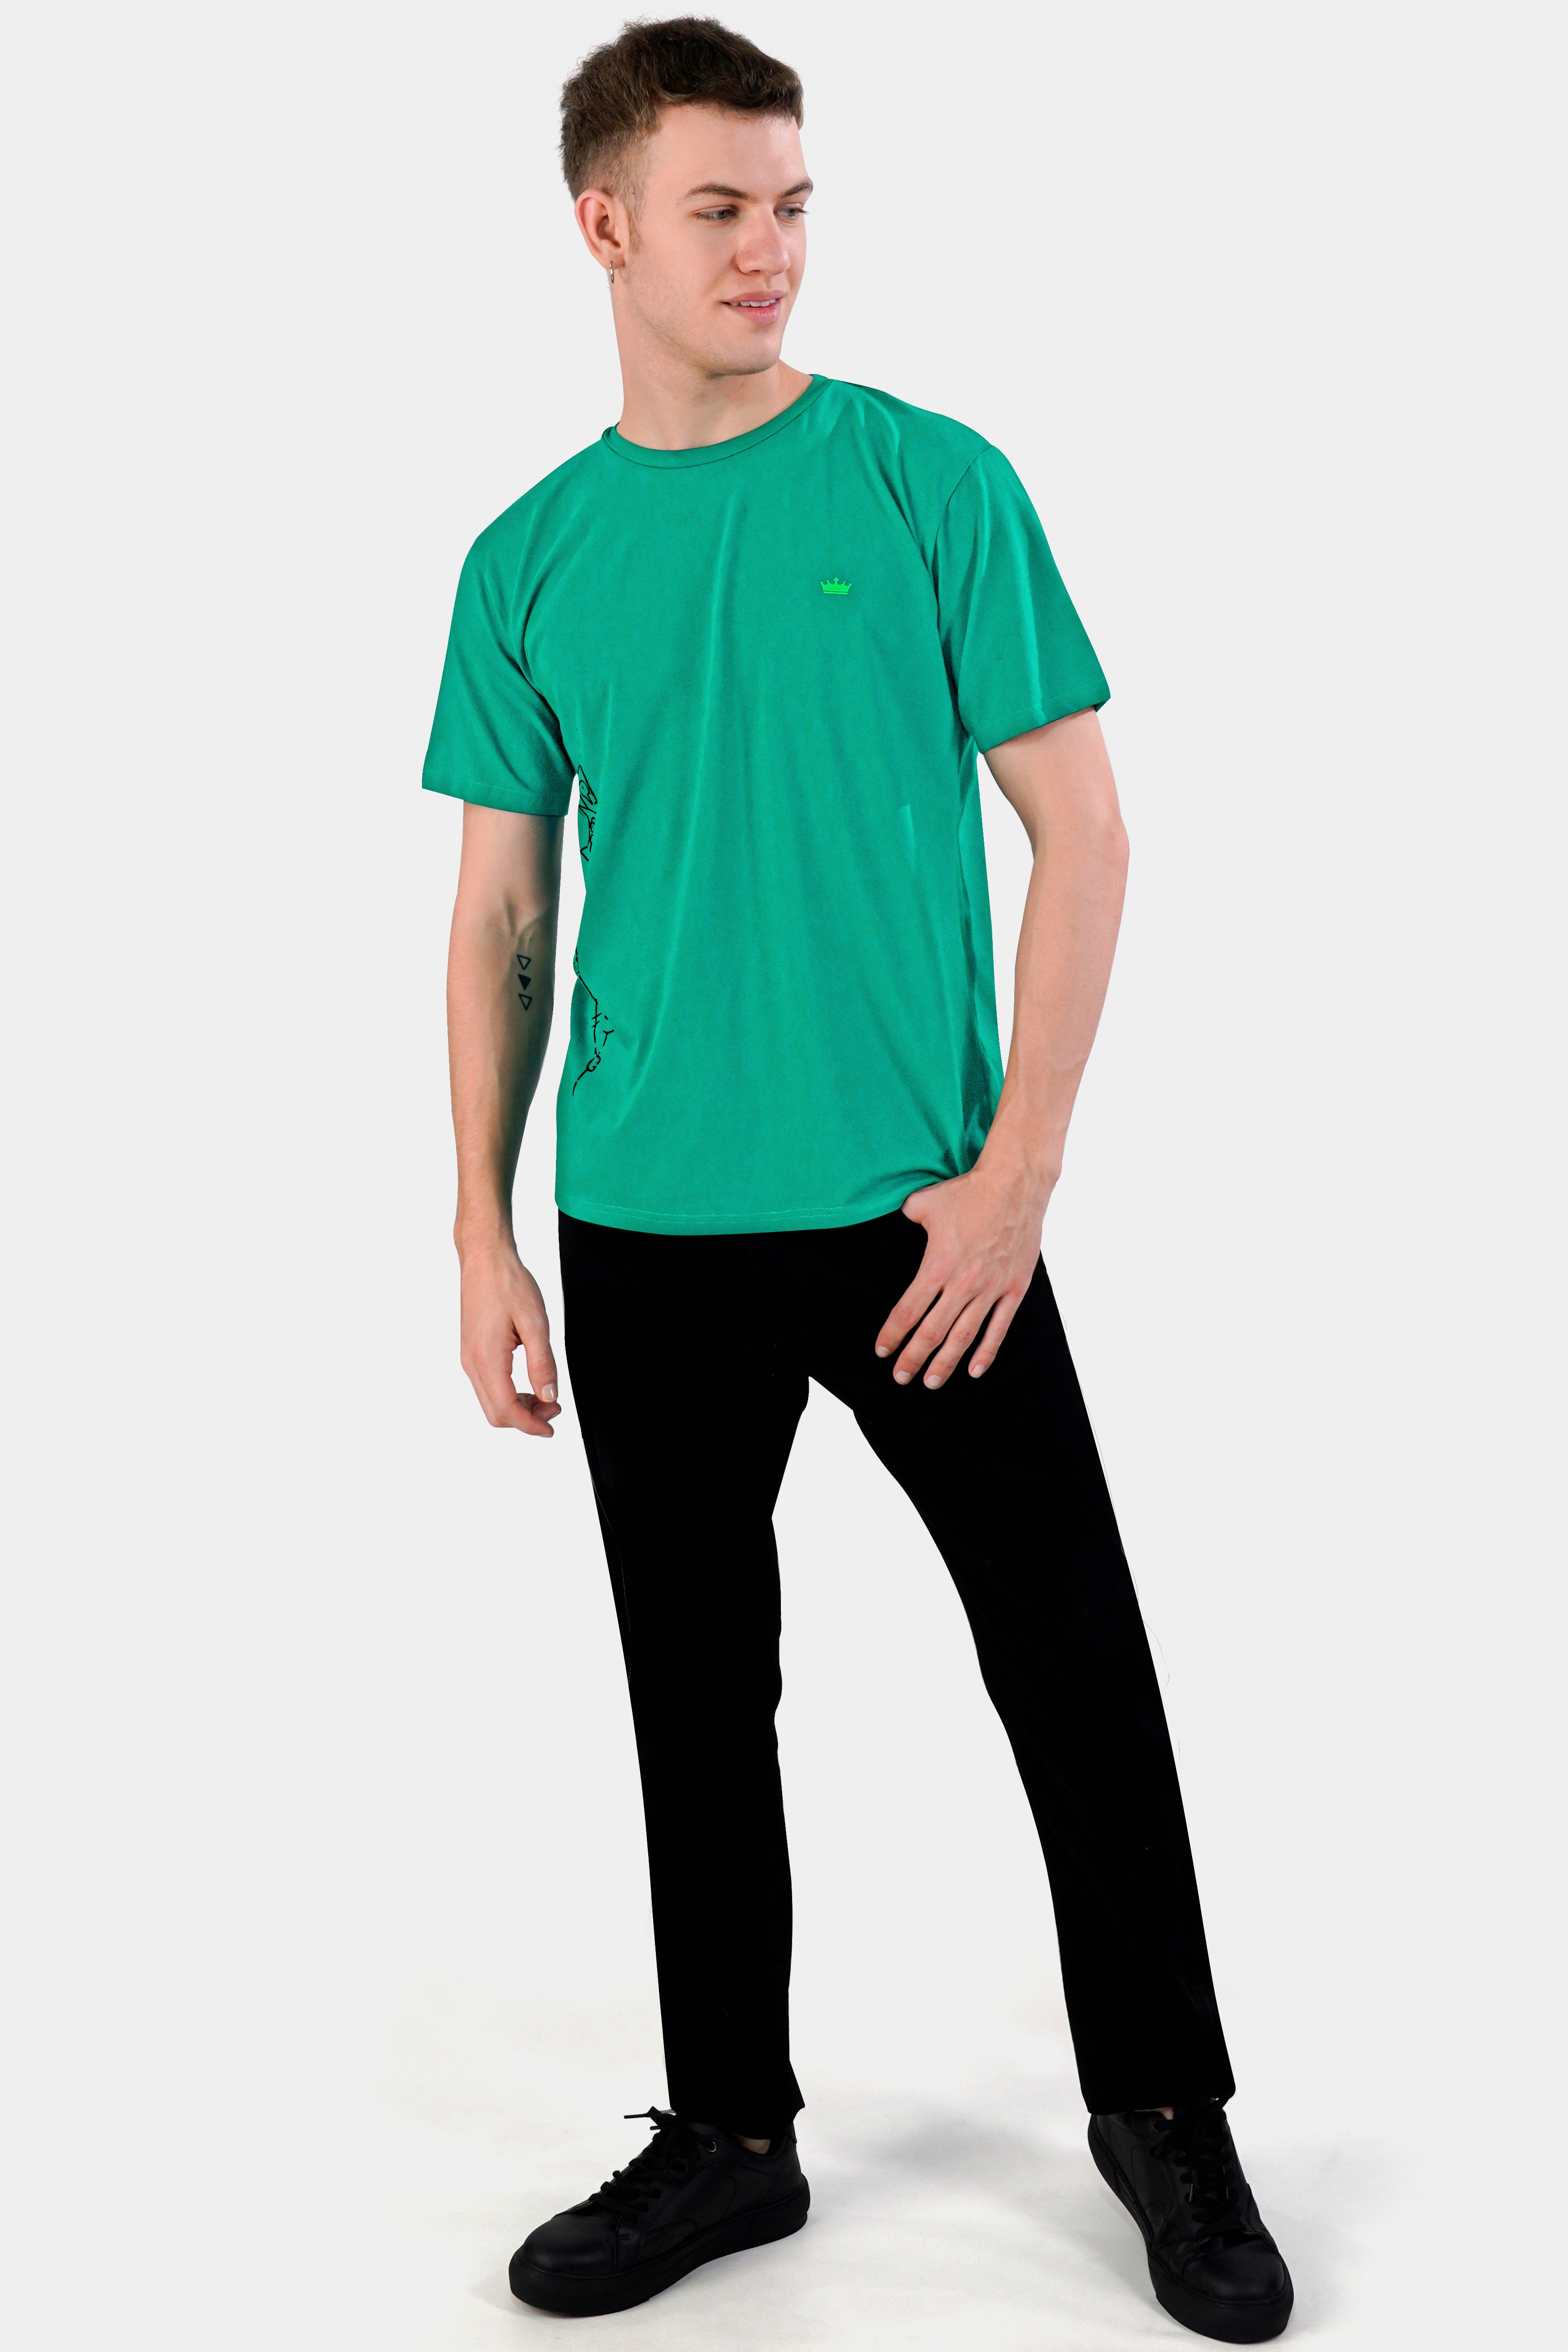 Gossamer Green Hand Painted Premium Cotton T-shirt TS005-W016-ART-S, TS005-W016-ART-M, TS005-W016-ART-L, TS005-W016-ART-XL, TS005-W016-ART-XXL